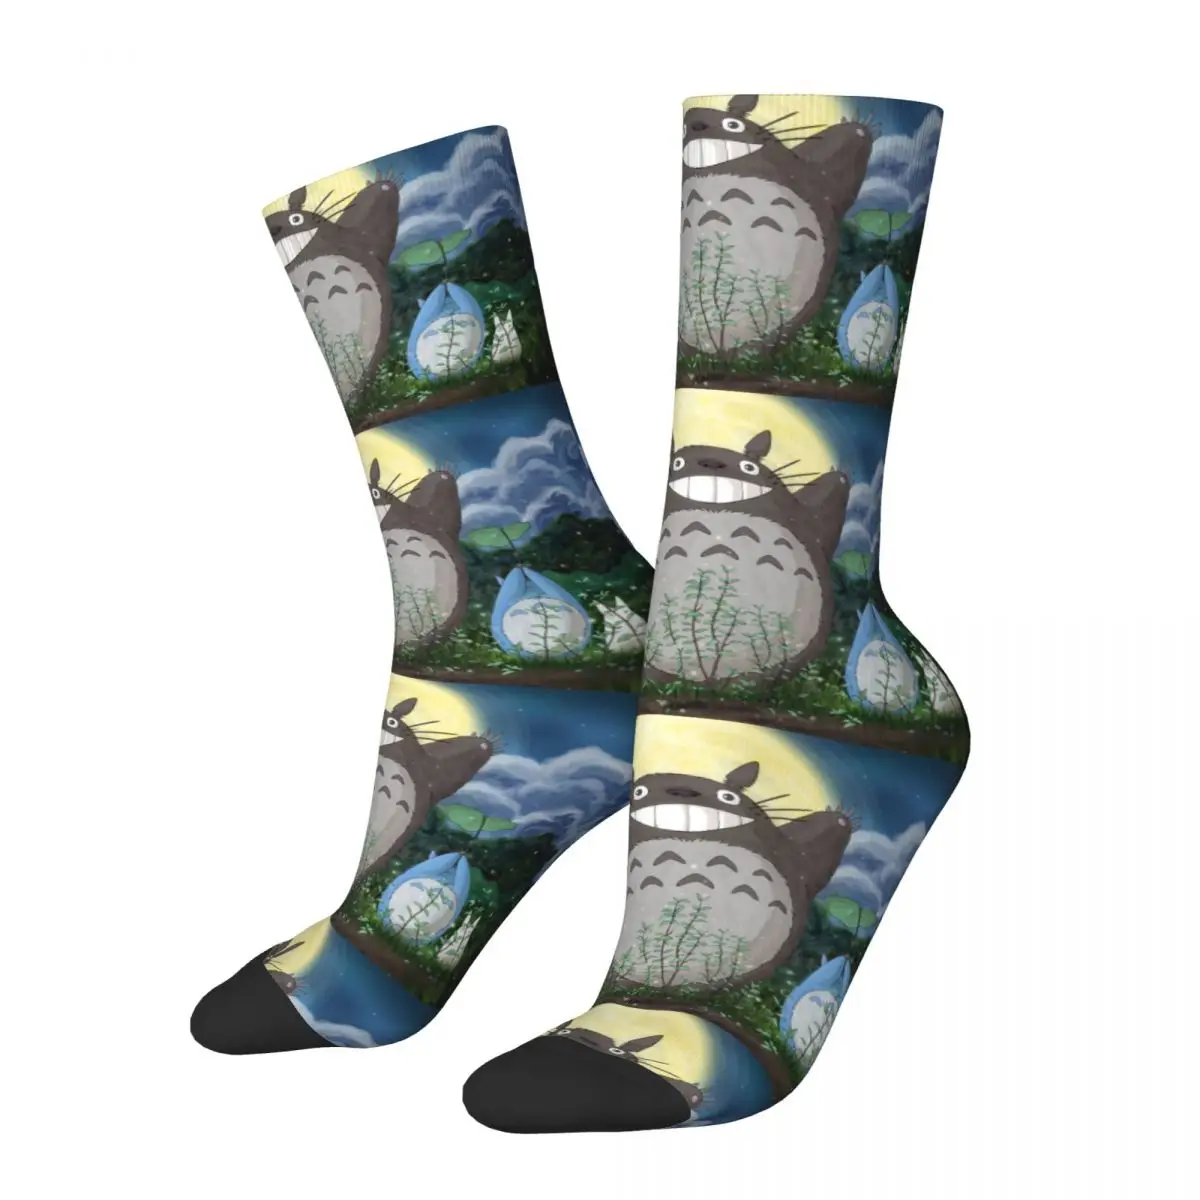 

Funny Crazy Sock for Men Dance Hip Hop Totoro Film Studio Ghibli Quality Pattern Printed Crew Sock Casual Gift